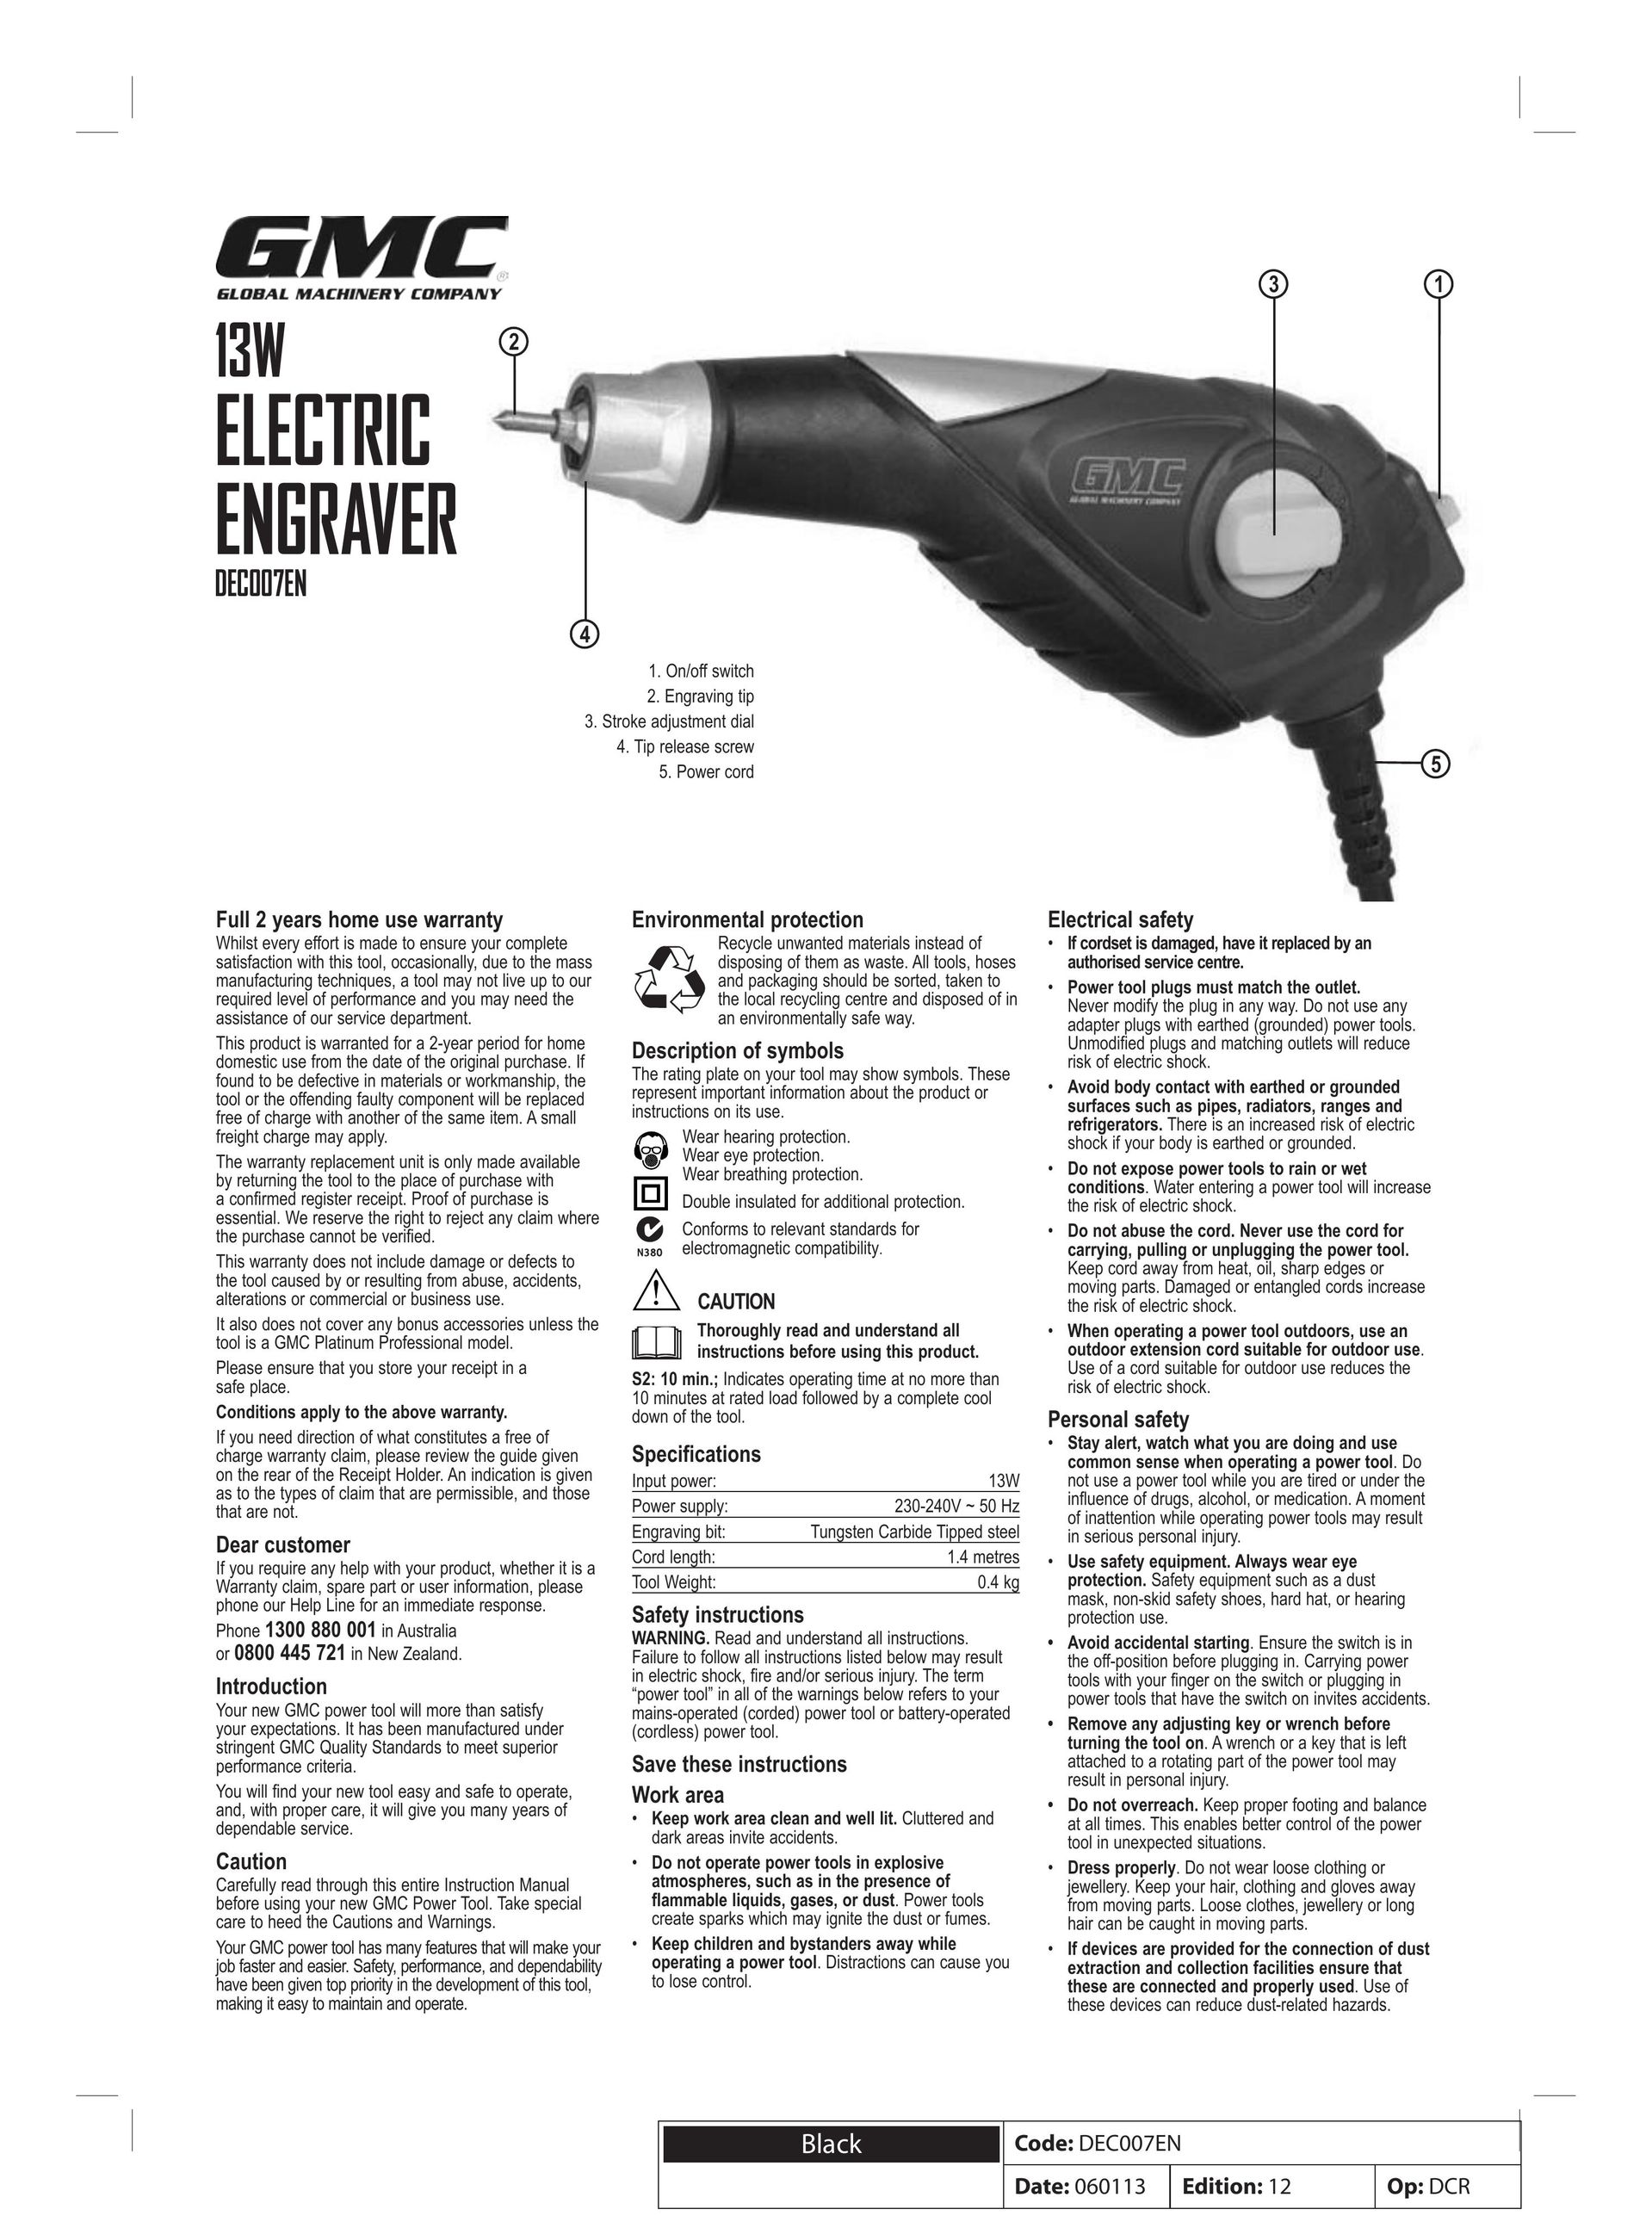 Global Machinery Company DEC007EN Engraver User Manual